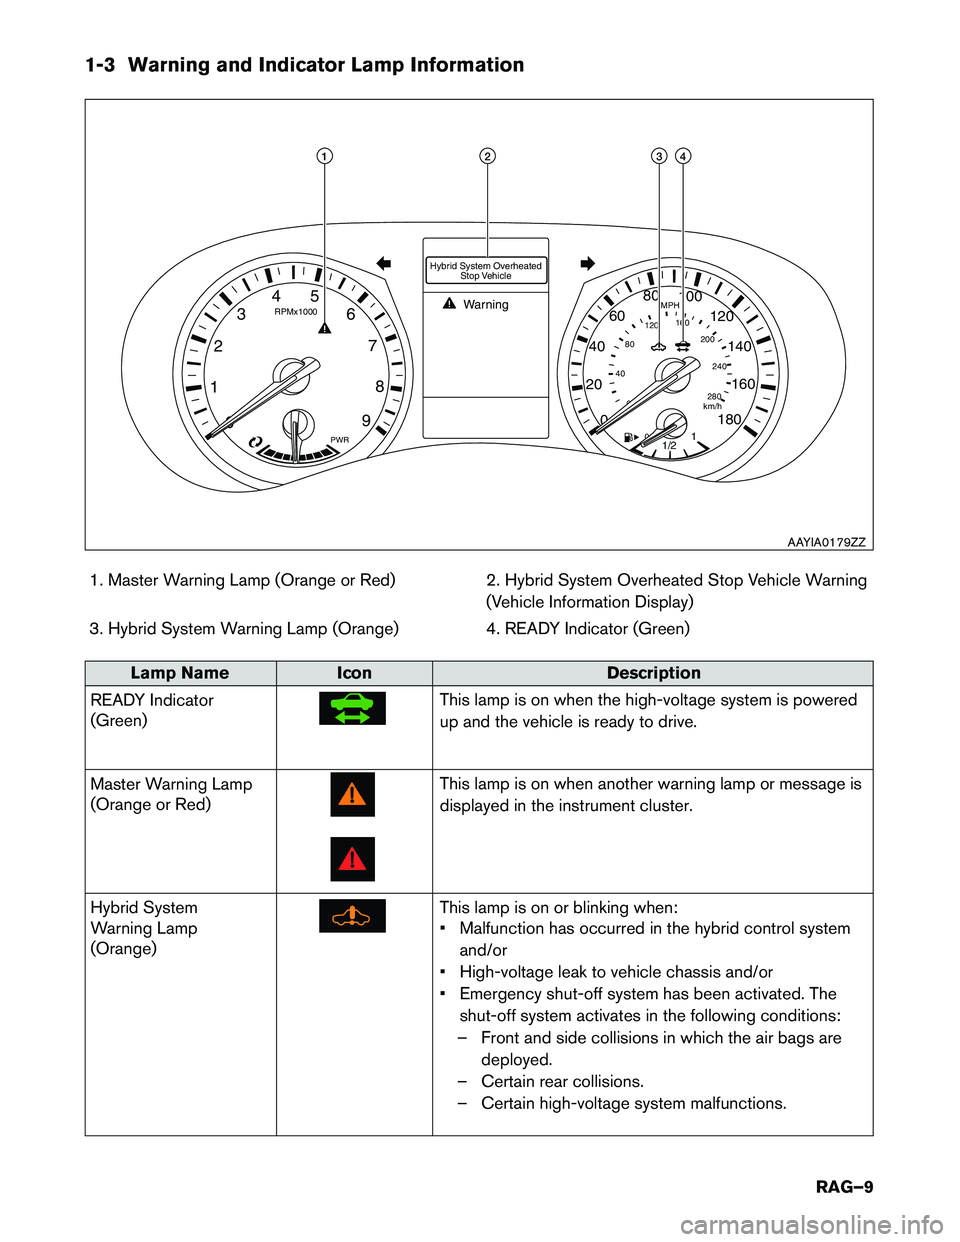 INFINITI Q50 HYBRID 2018  Roadside Assistance Guide 1-3 Warning and Indicator Lamp Information
1. Master Warning Lamp (Orange or Red) 2. Hybrid System Overheated Stop Vehicle Warning
(Vehicle Information Display)
3. Hybrid System Warning Lamp (Orange) 